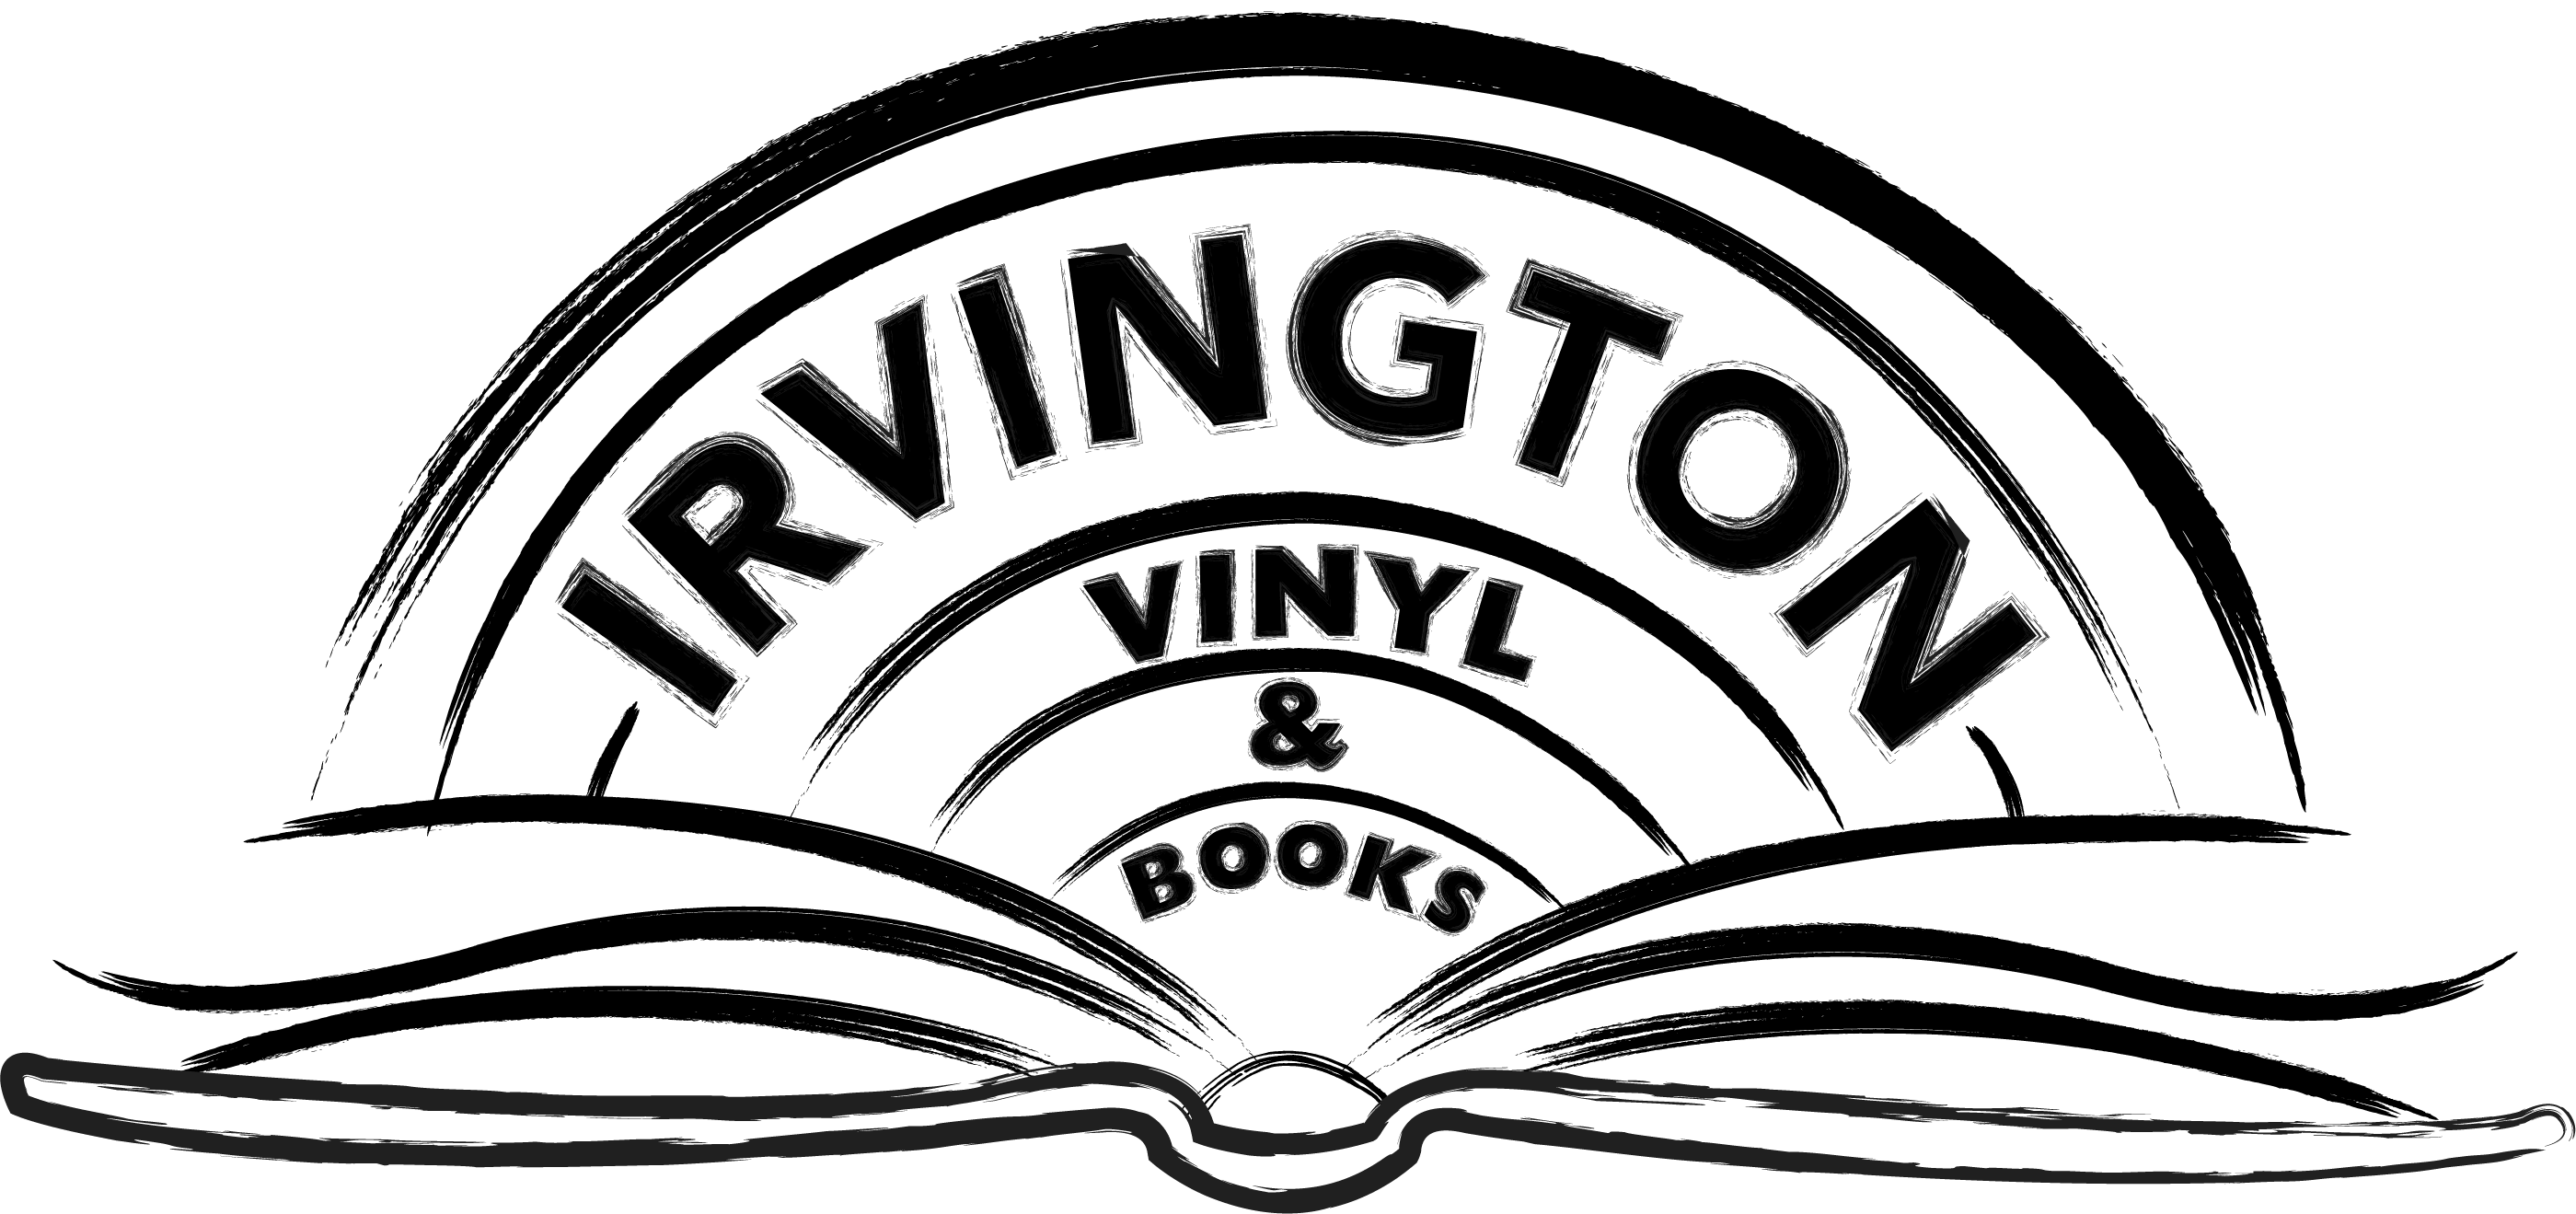 Irvington Vinyl and Books